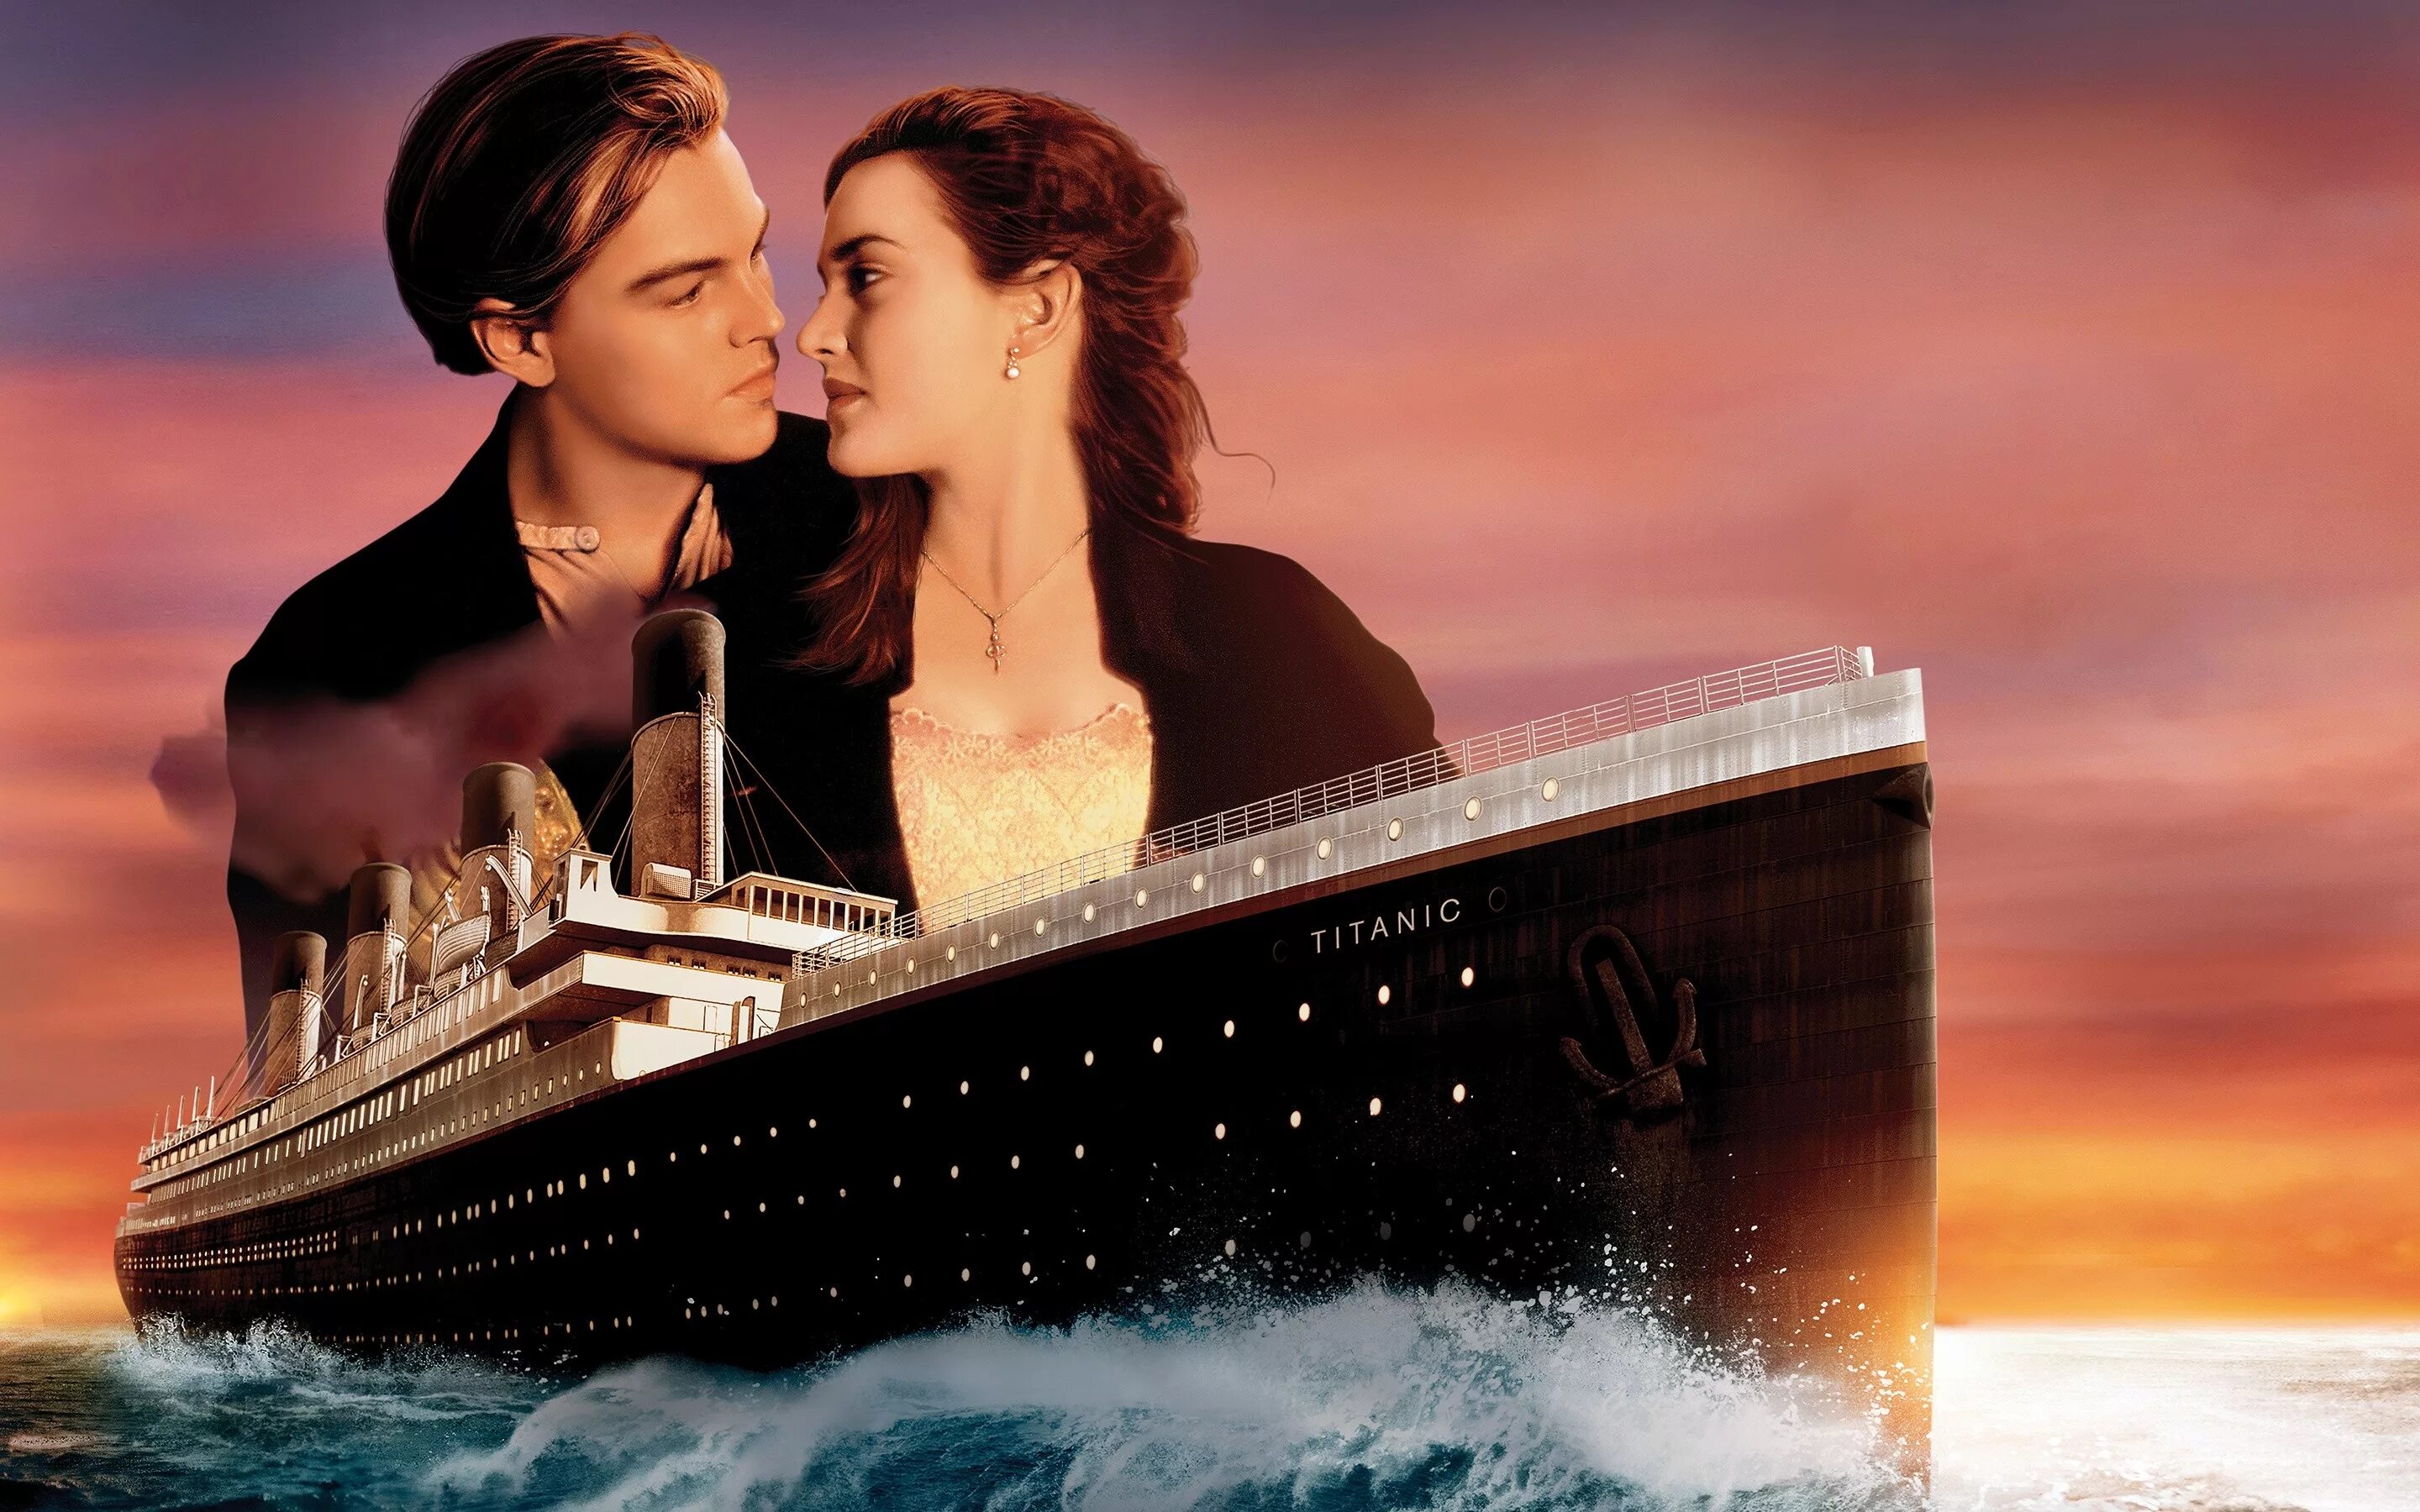 Титаник 1997 Джек. Кейт Уинслет 18 Титаник. Kate Winslet Титаник. Титаник ди Каприо и Кейт.